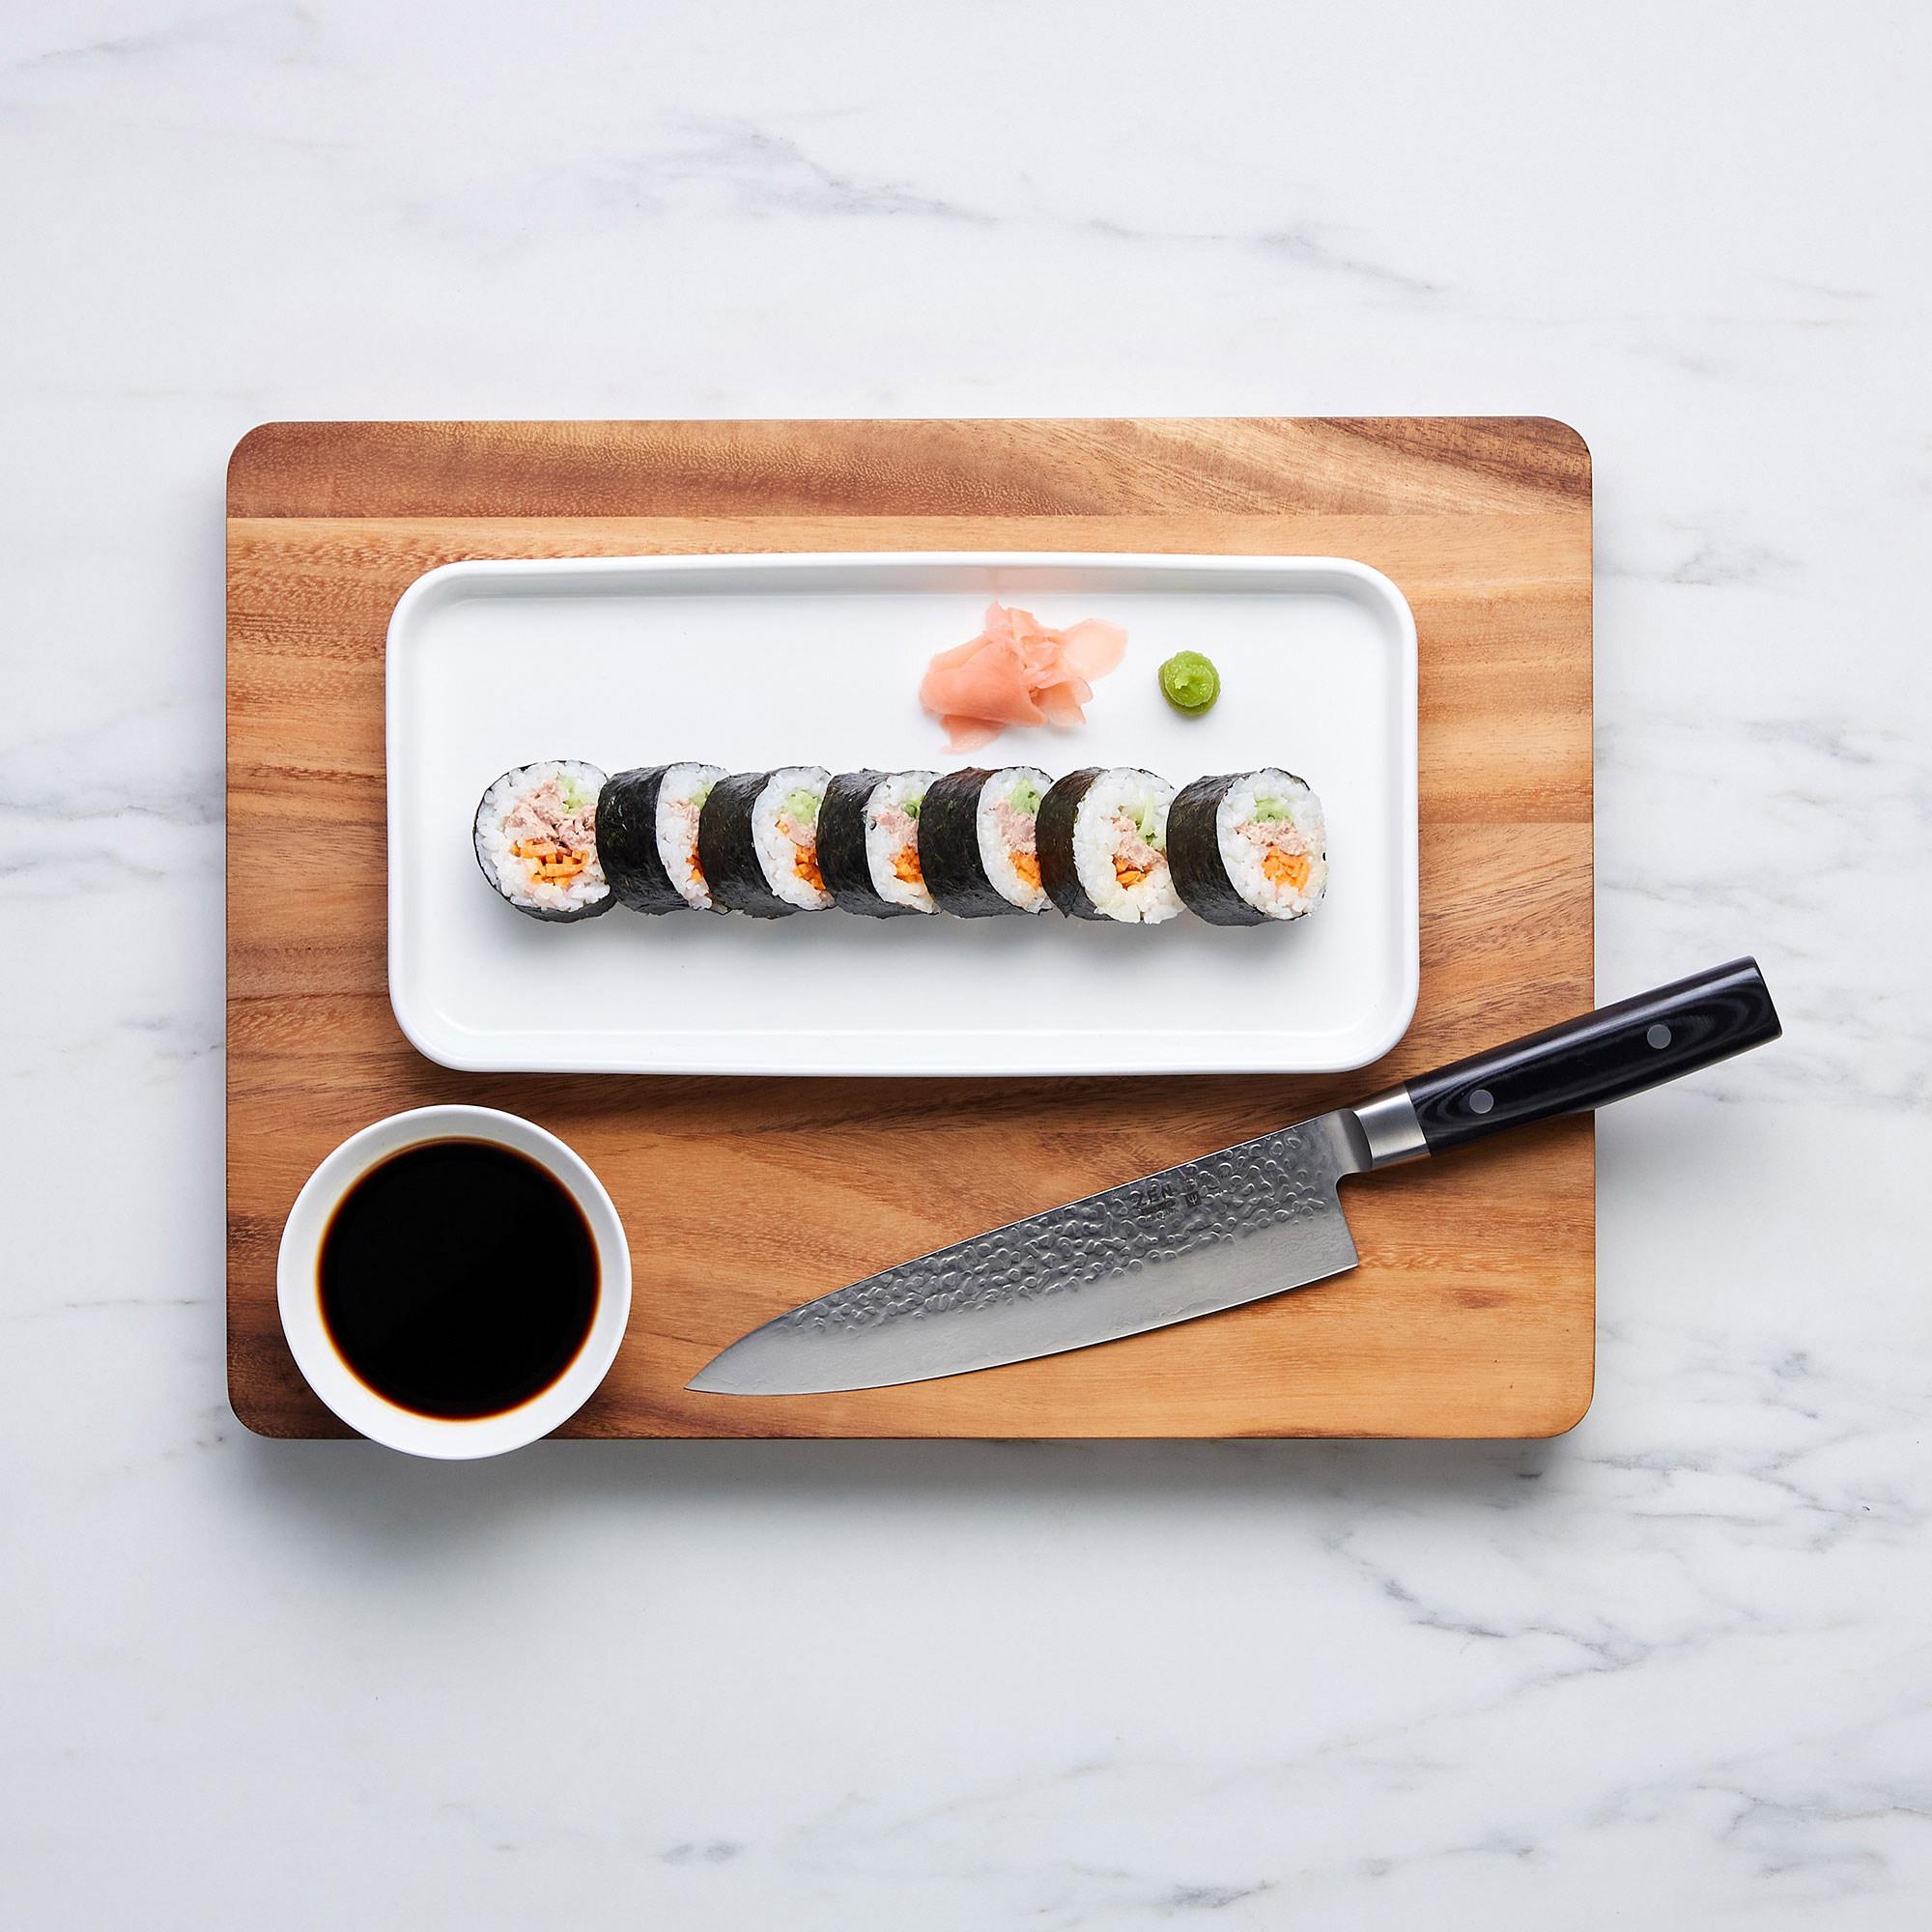 The Original Sushezi Sushi Maker Image 6